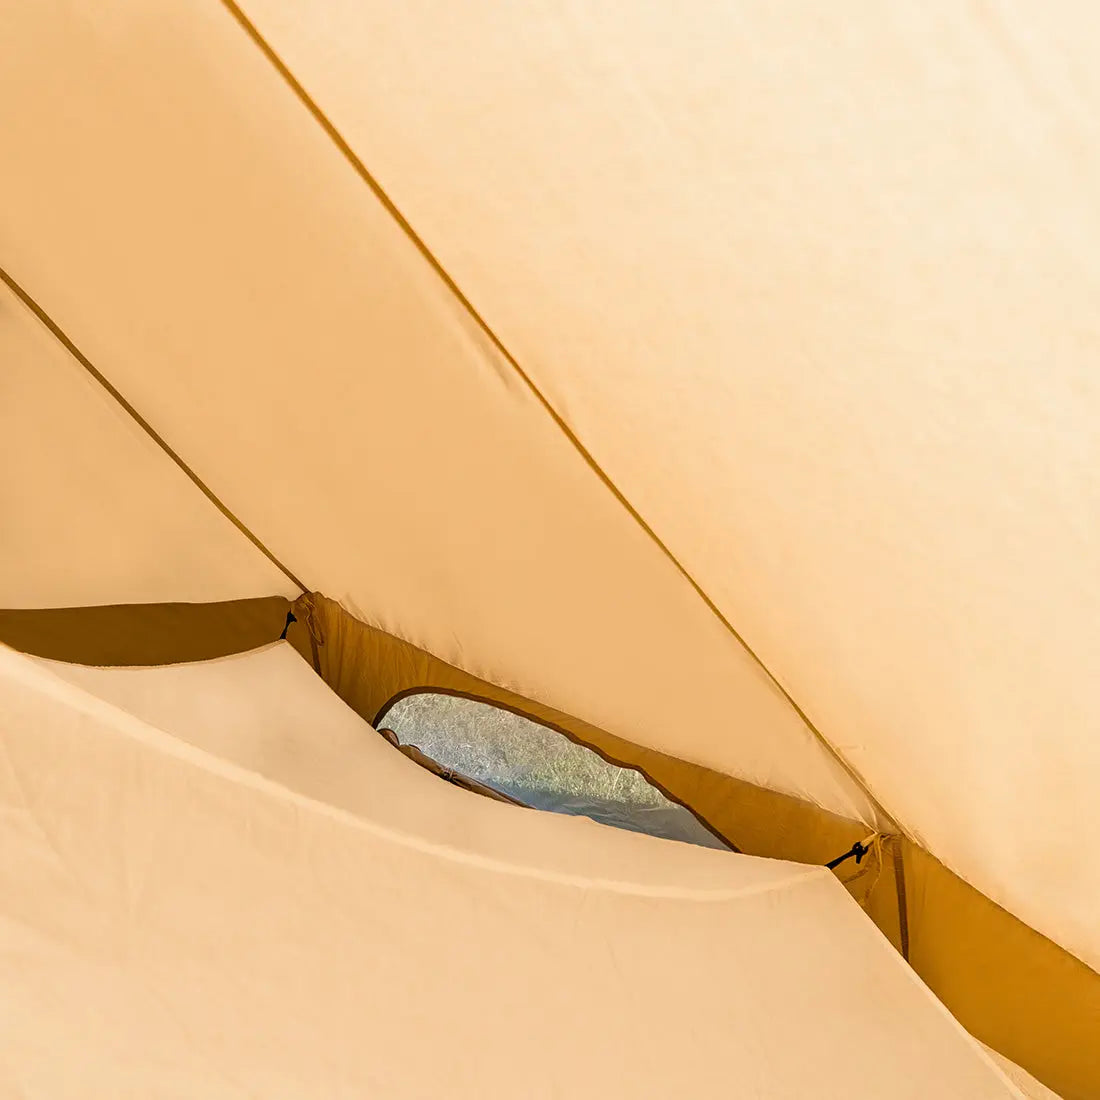 Inner Tent (All Designs)  Boutique Camping dark light blackout